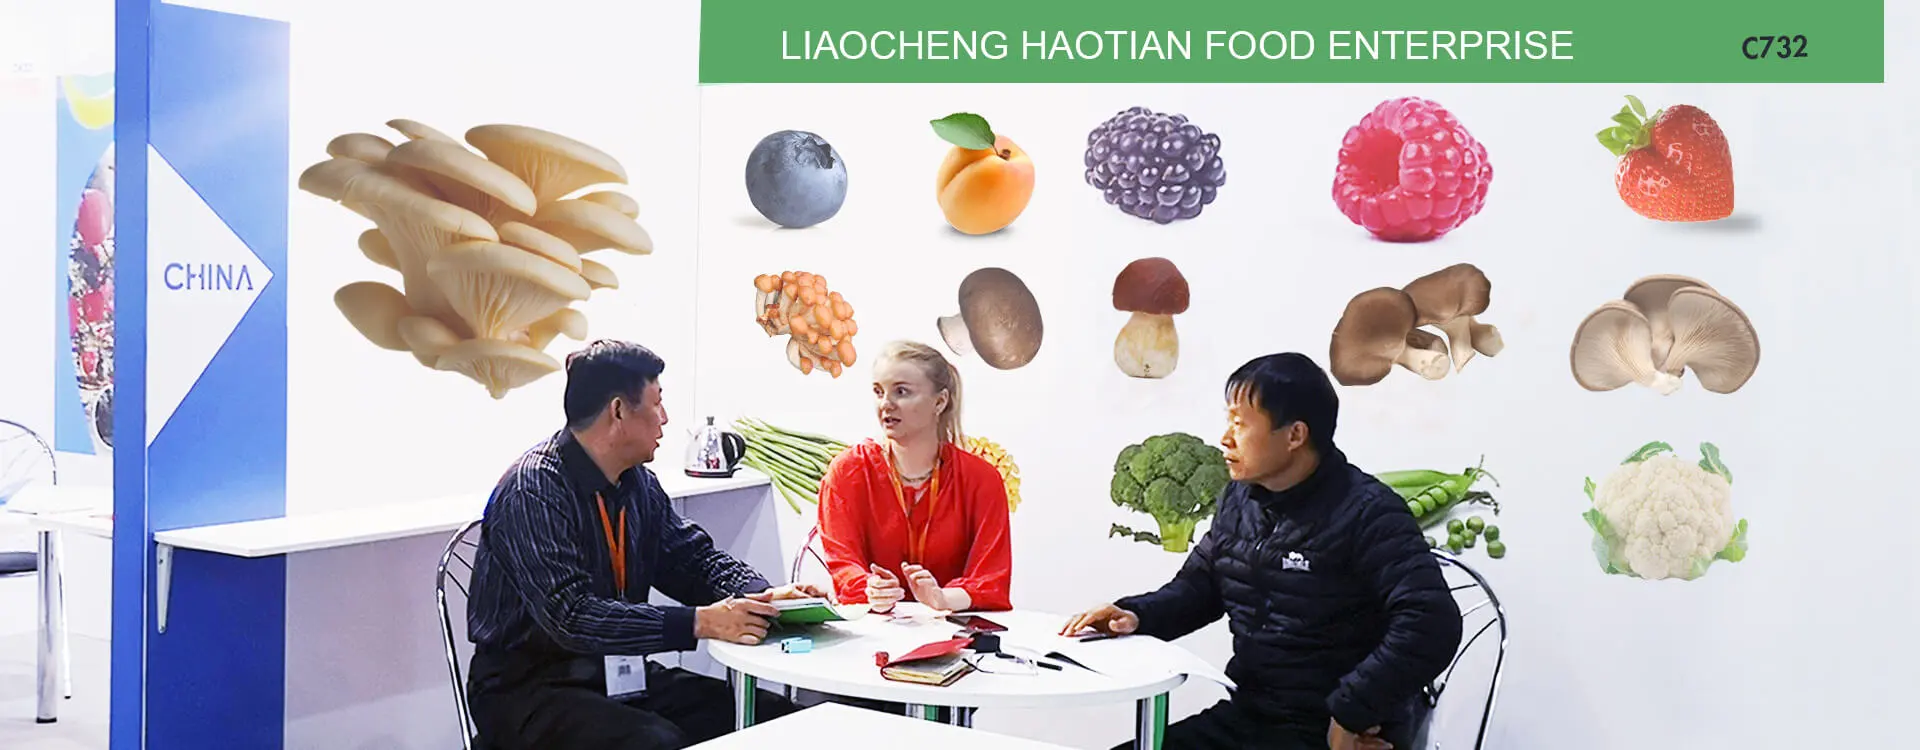 Impresa alimentare haotiana di Liaocheng